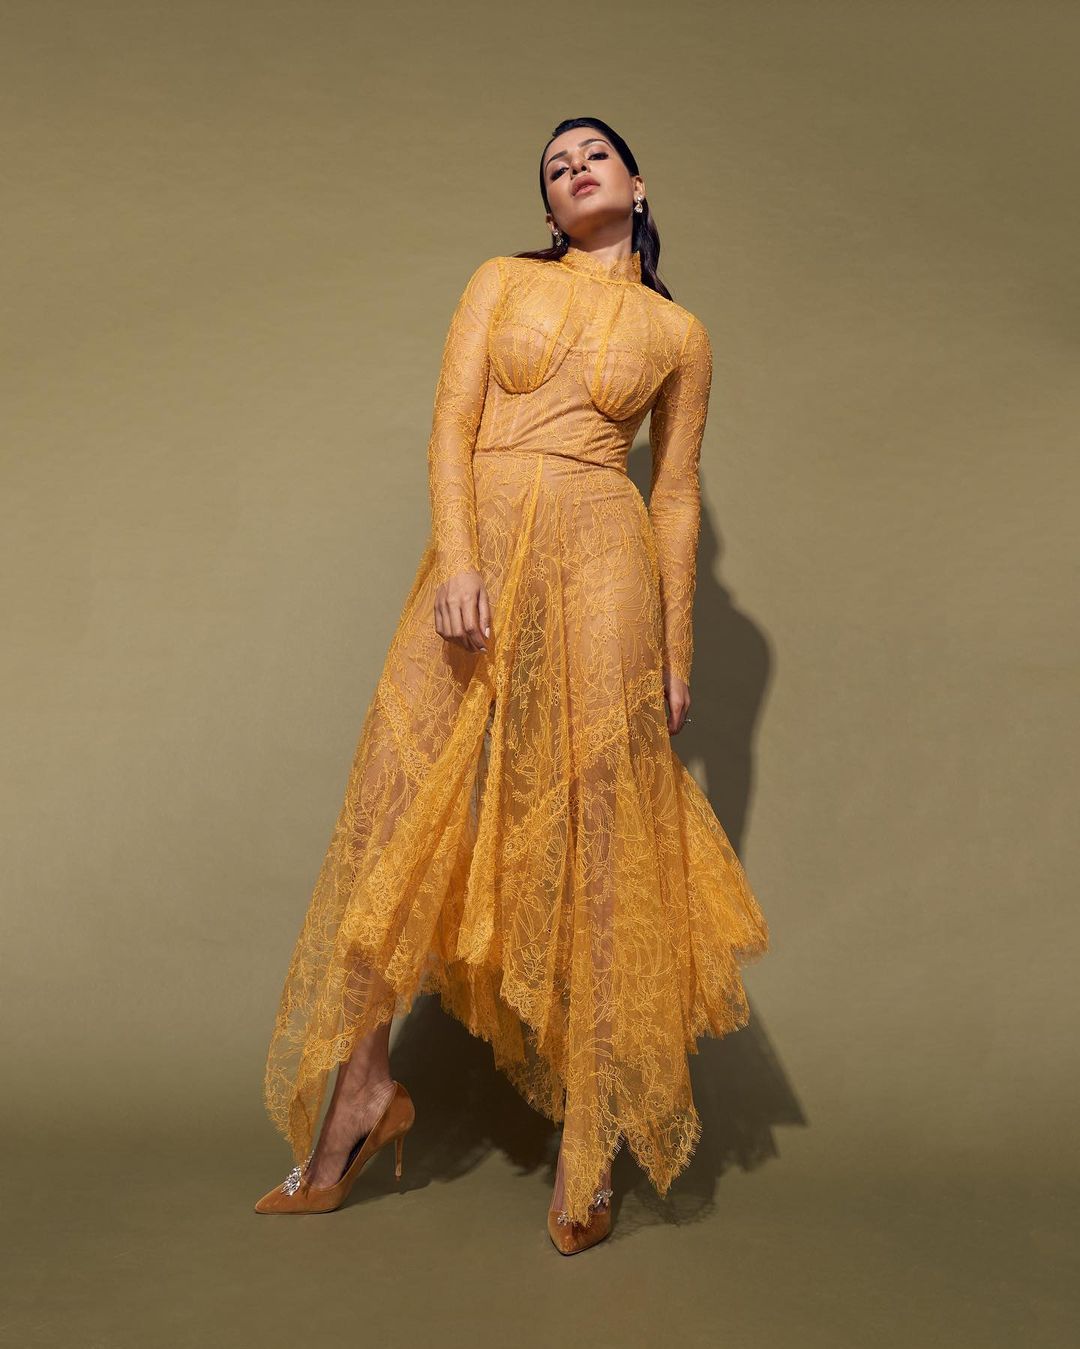 yellow see-through dress of Samantha